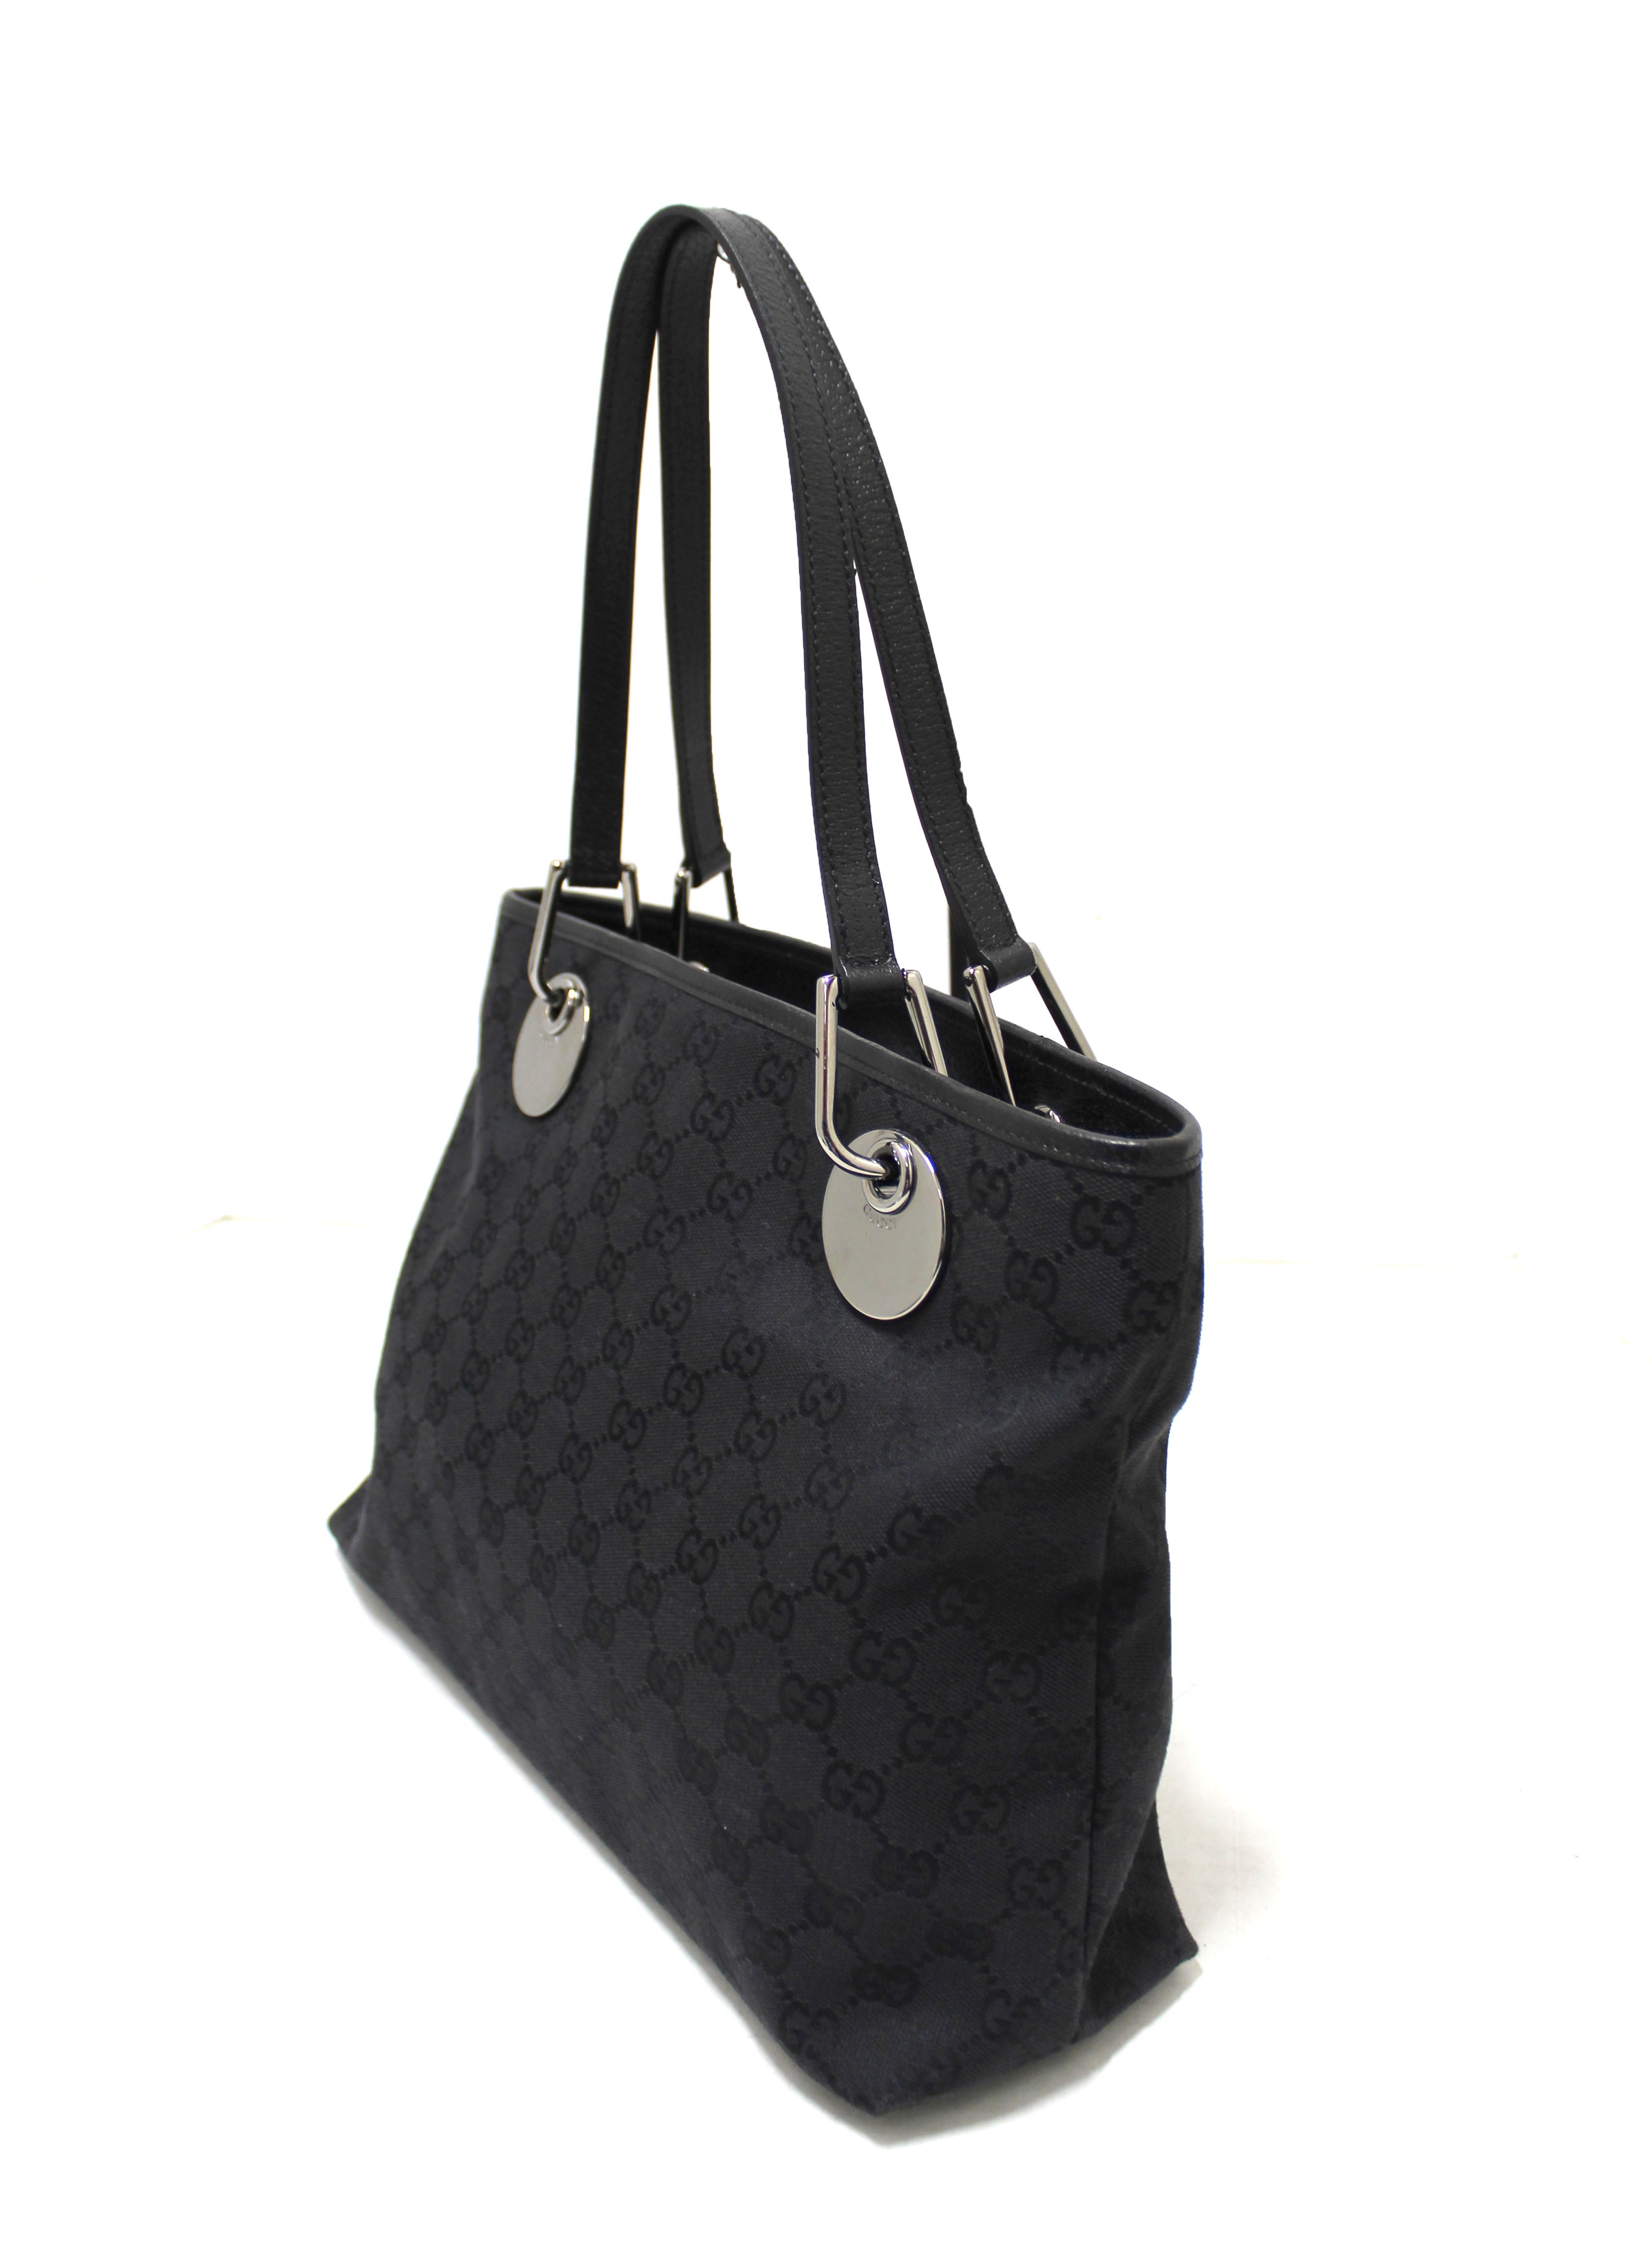 Authentic Gucci Black Canvas GG Monogram Shoulder Tote Bag